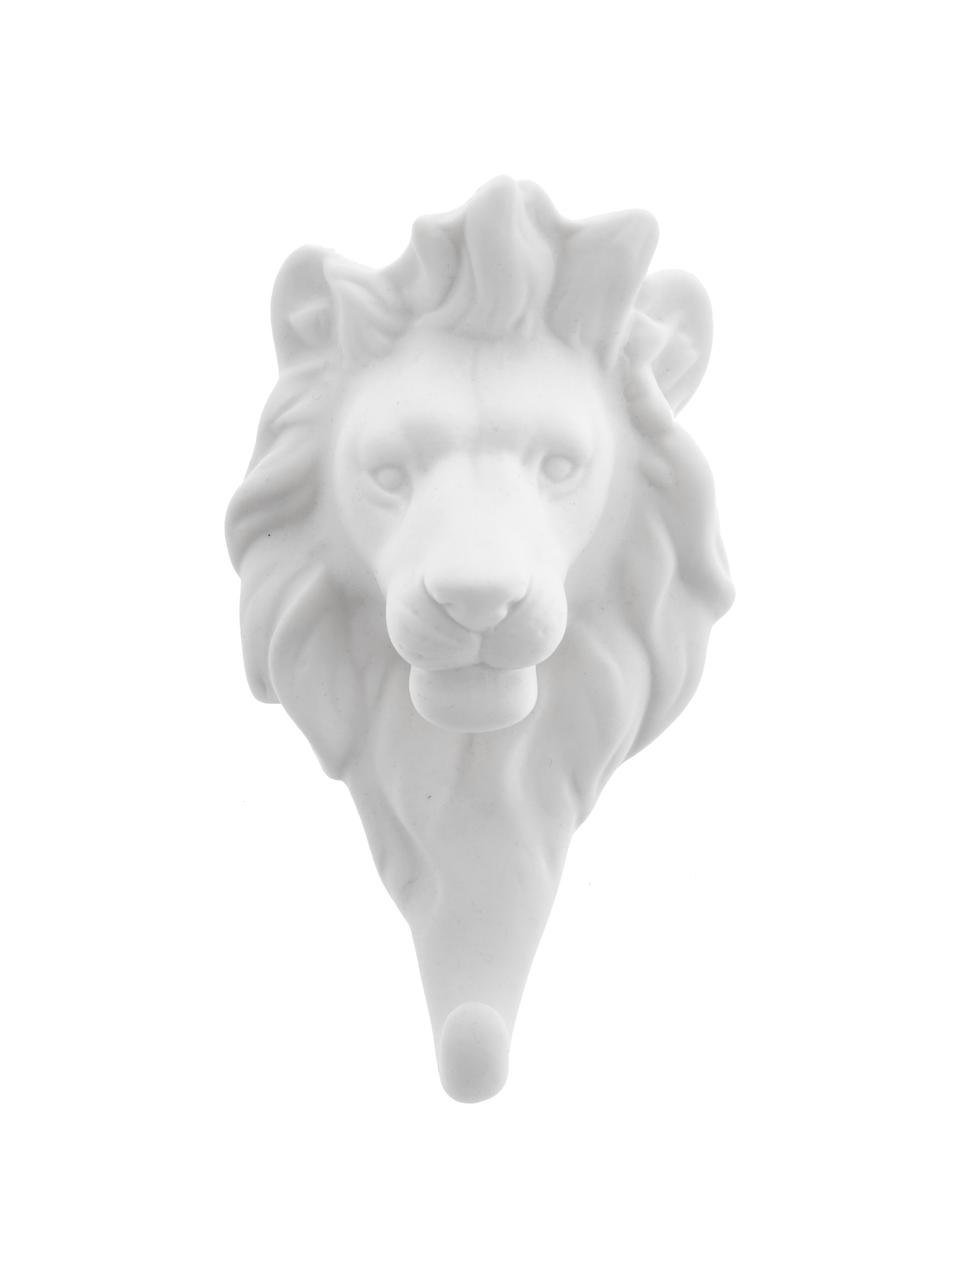 Wandhaken Lion aus Porzellan, Porzellan, Weiß, H 15 cm